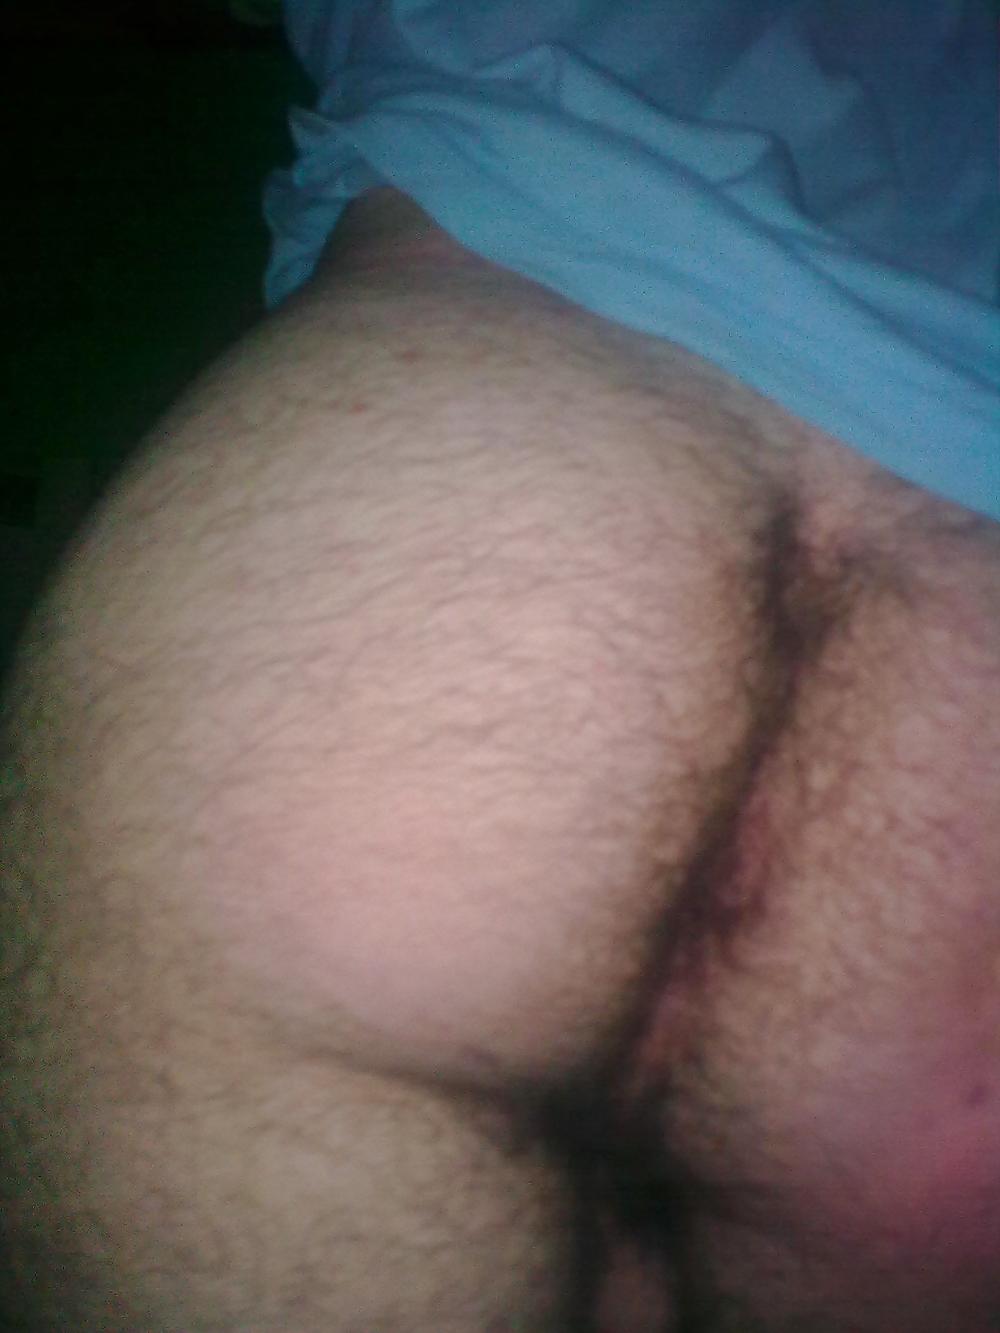 My butt - hairy